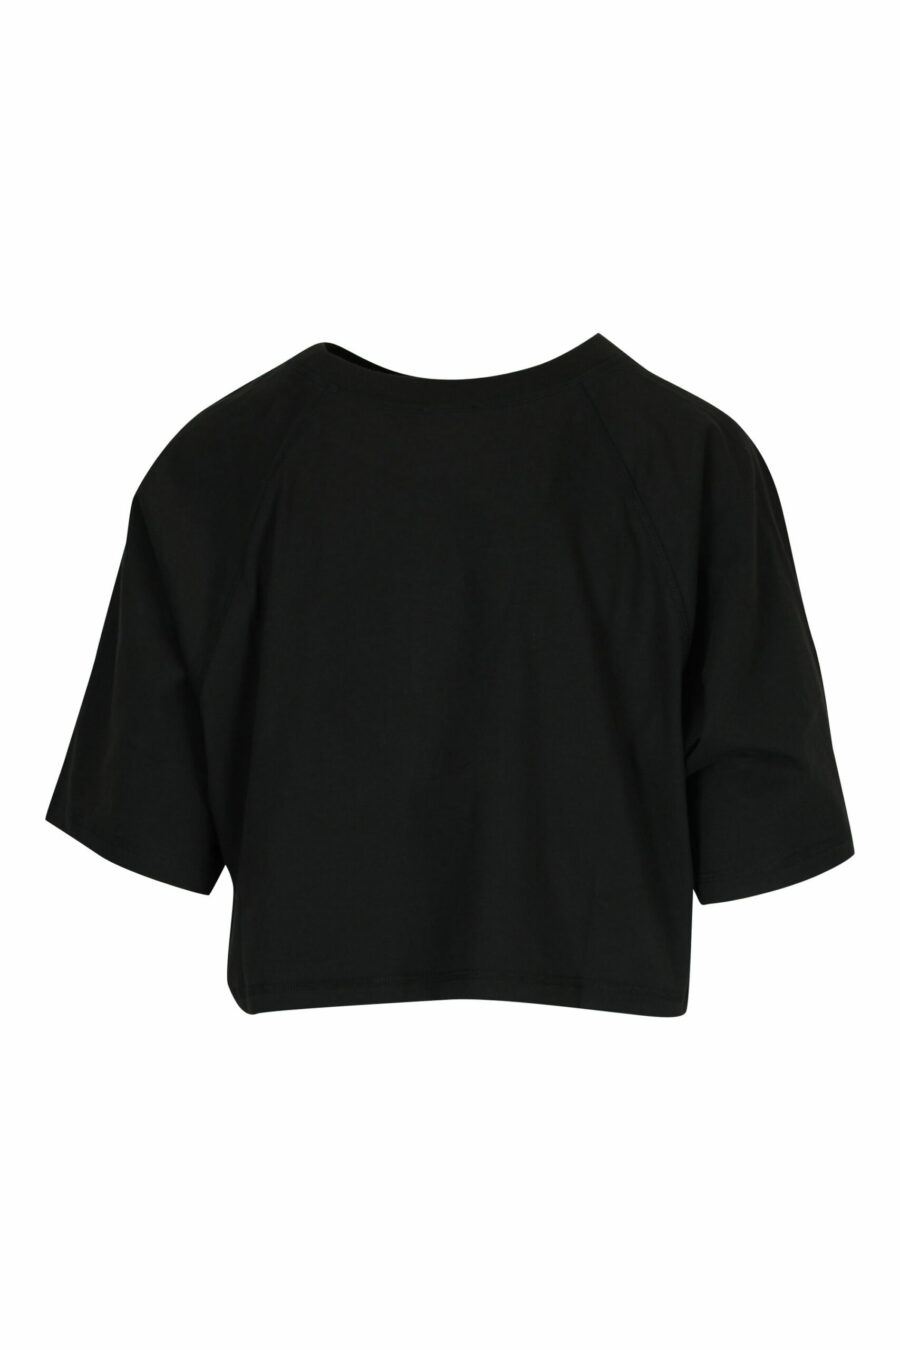 Camiseta negra con maxilogo "boke flower" negro - 3612230587045 1 scaled